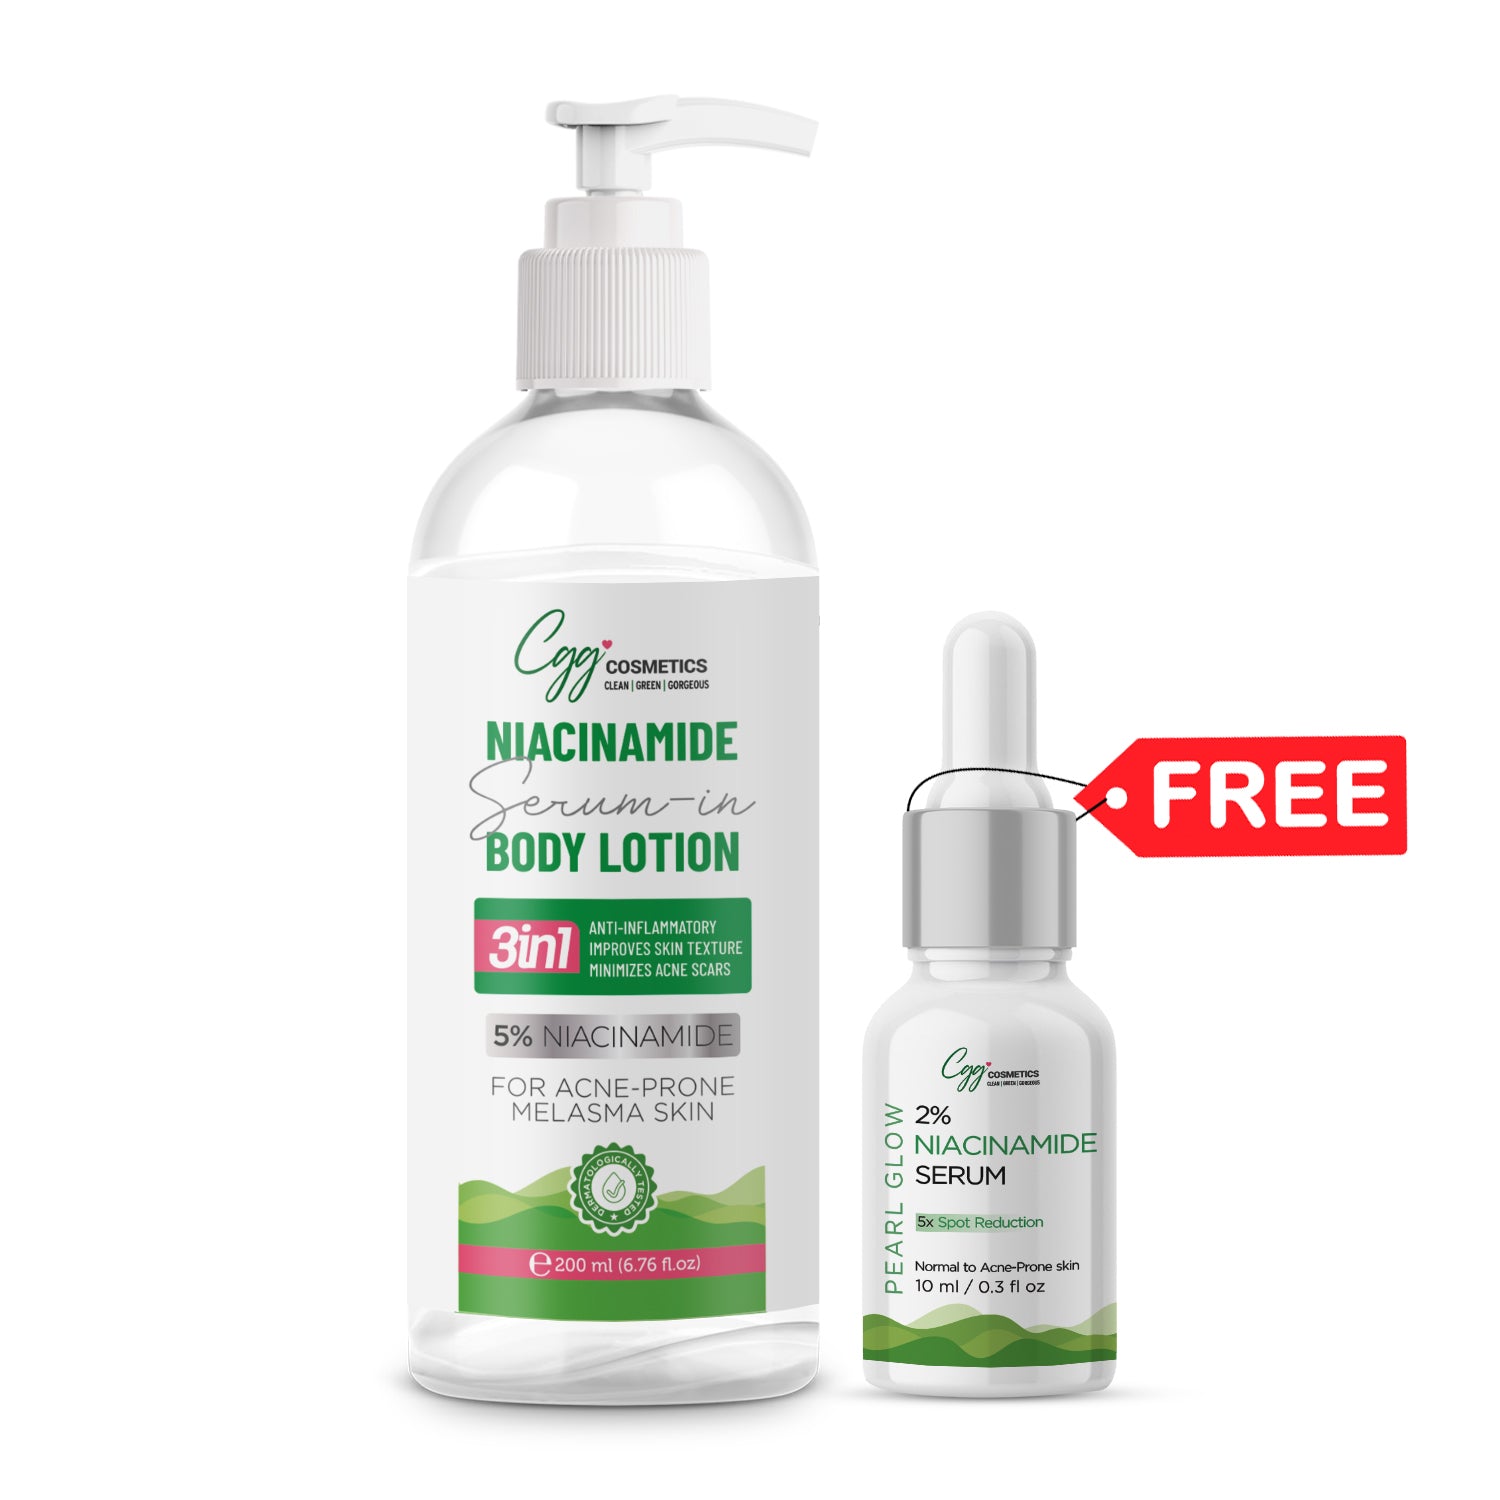 CGG Cosmetics 5% Niacinamide Serum in Body Lotion 200ml + FREE 10ml Sample of 2% Niacinamide Serum